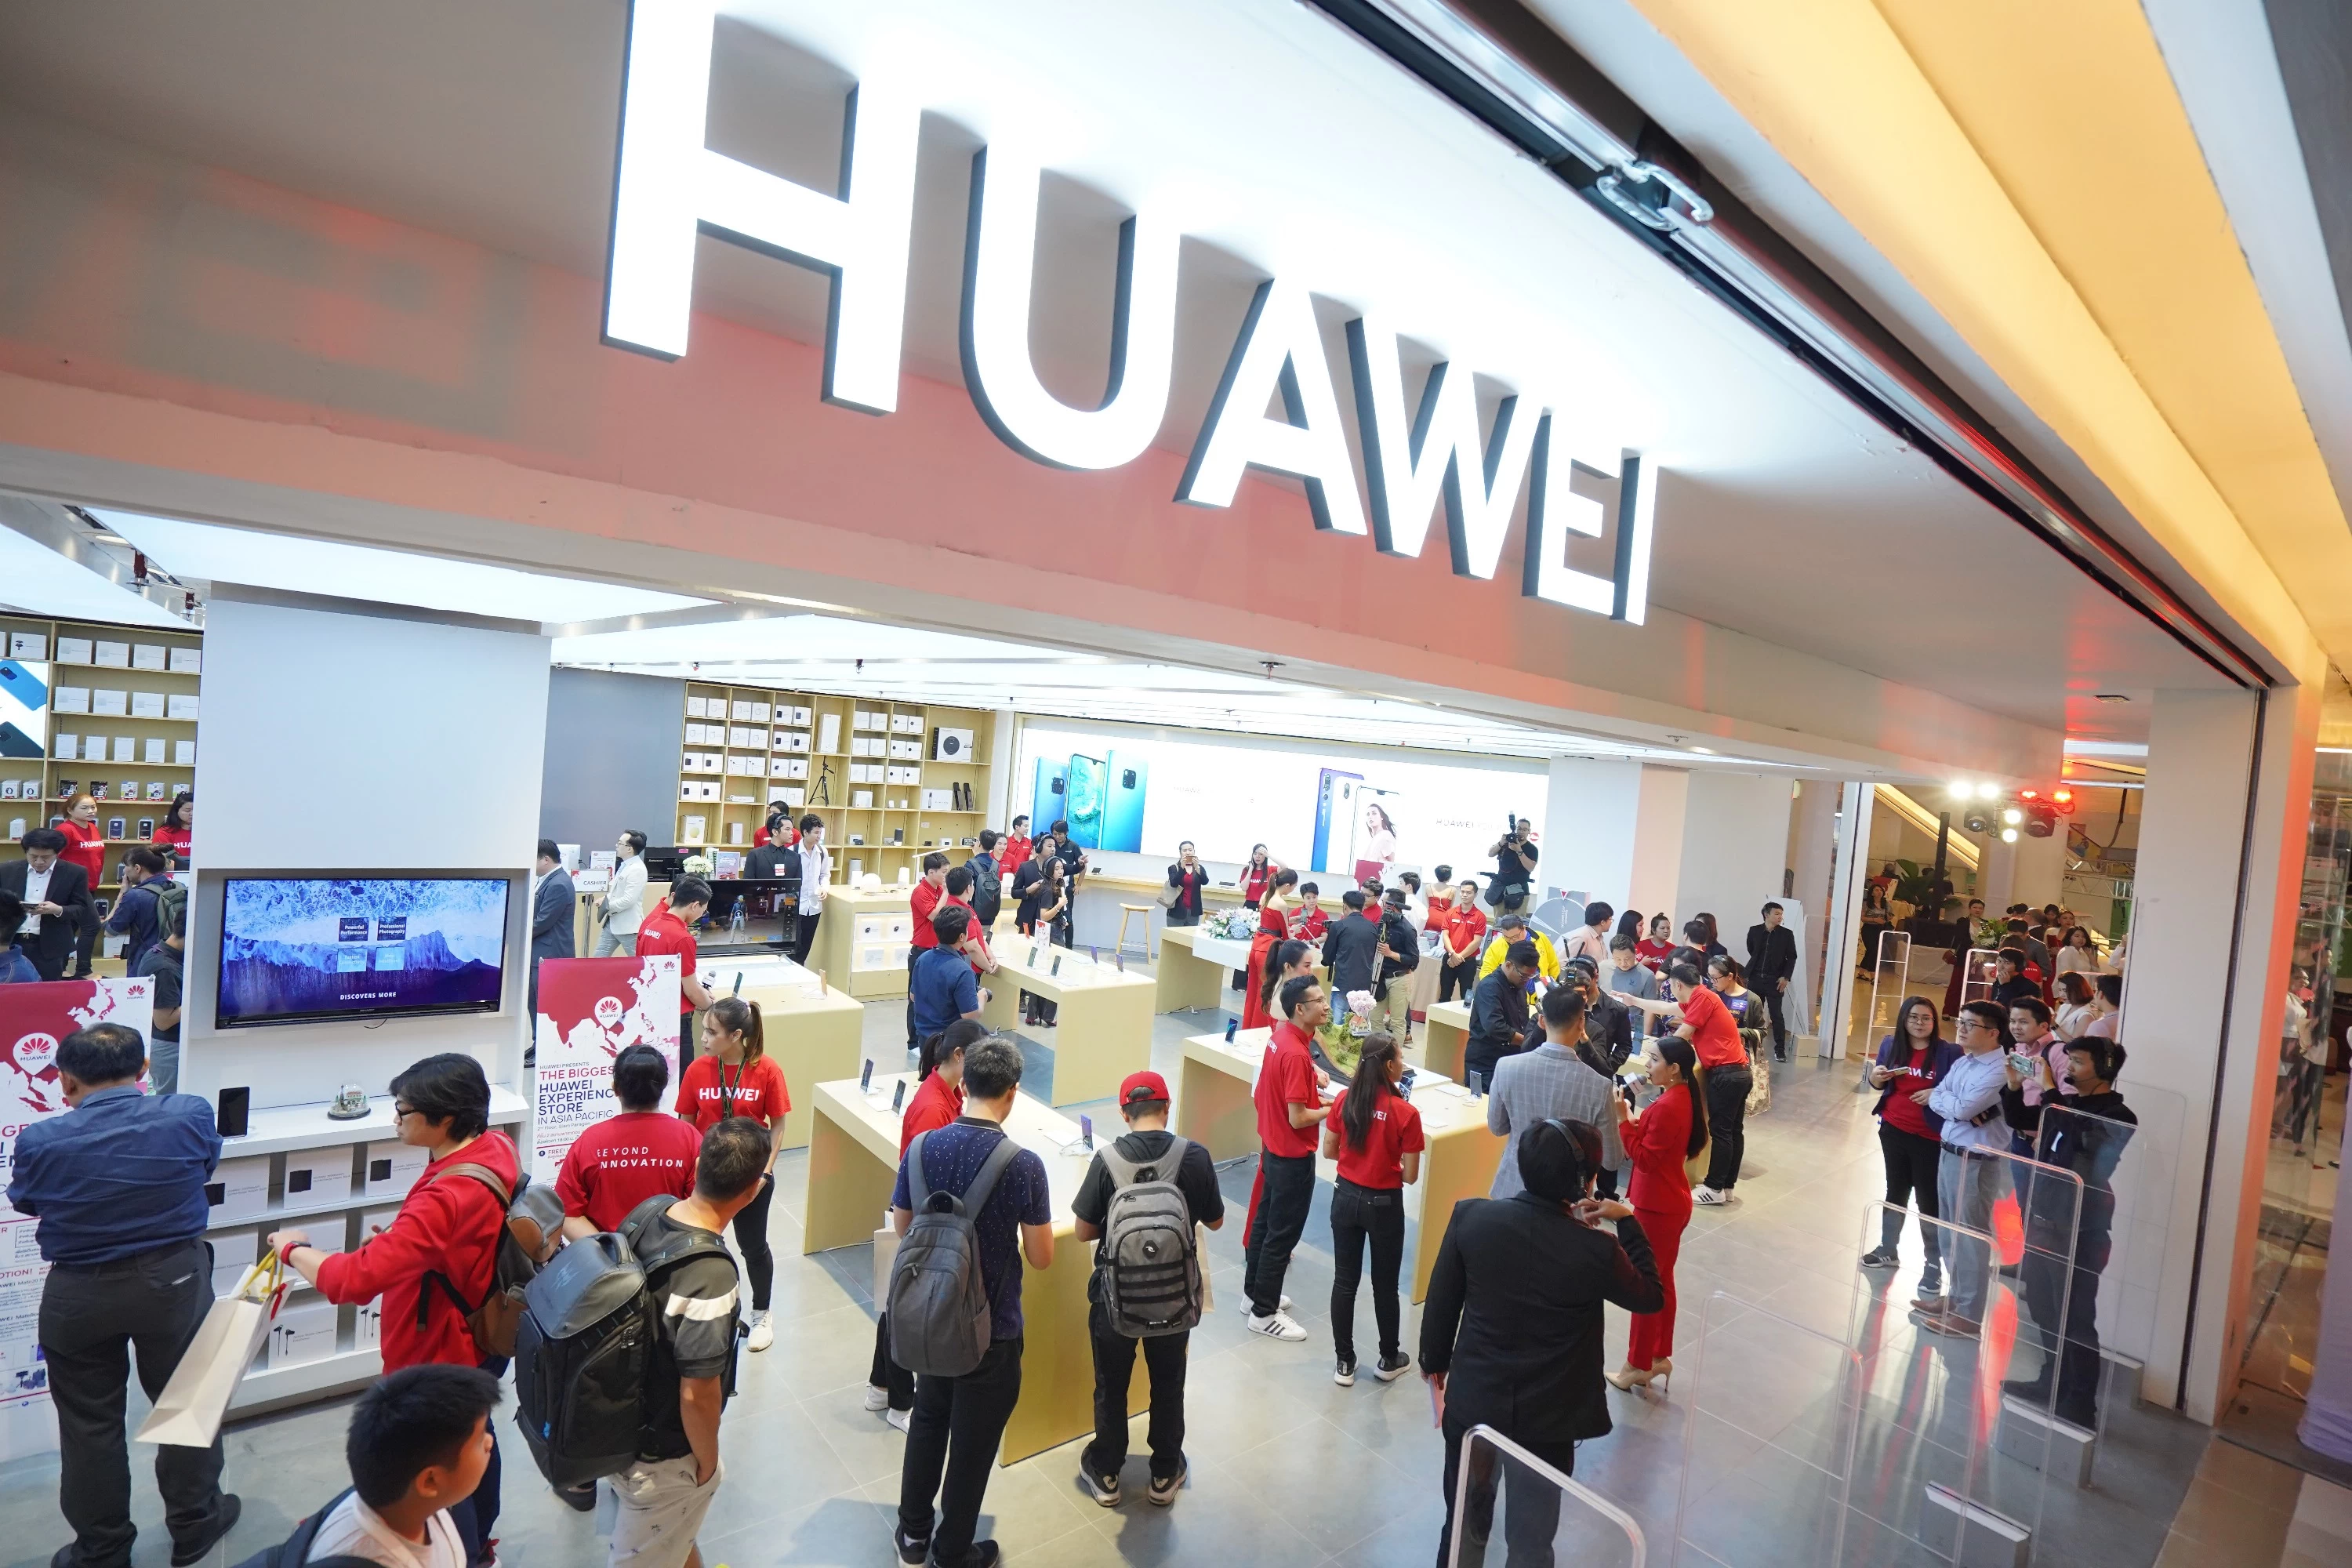 HUAWEI Experience Store at Siam Paragon 8 | Huawei Experience Store | หัวเว่ยเปิด “Huawei Experience Store” ใหญ่ที่สุดในเอเชียแปซิฟิกที่สยามพารากอน